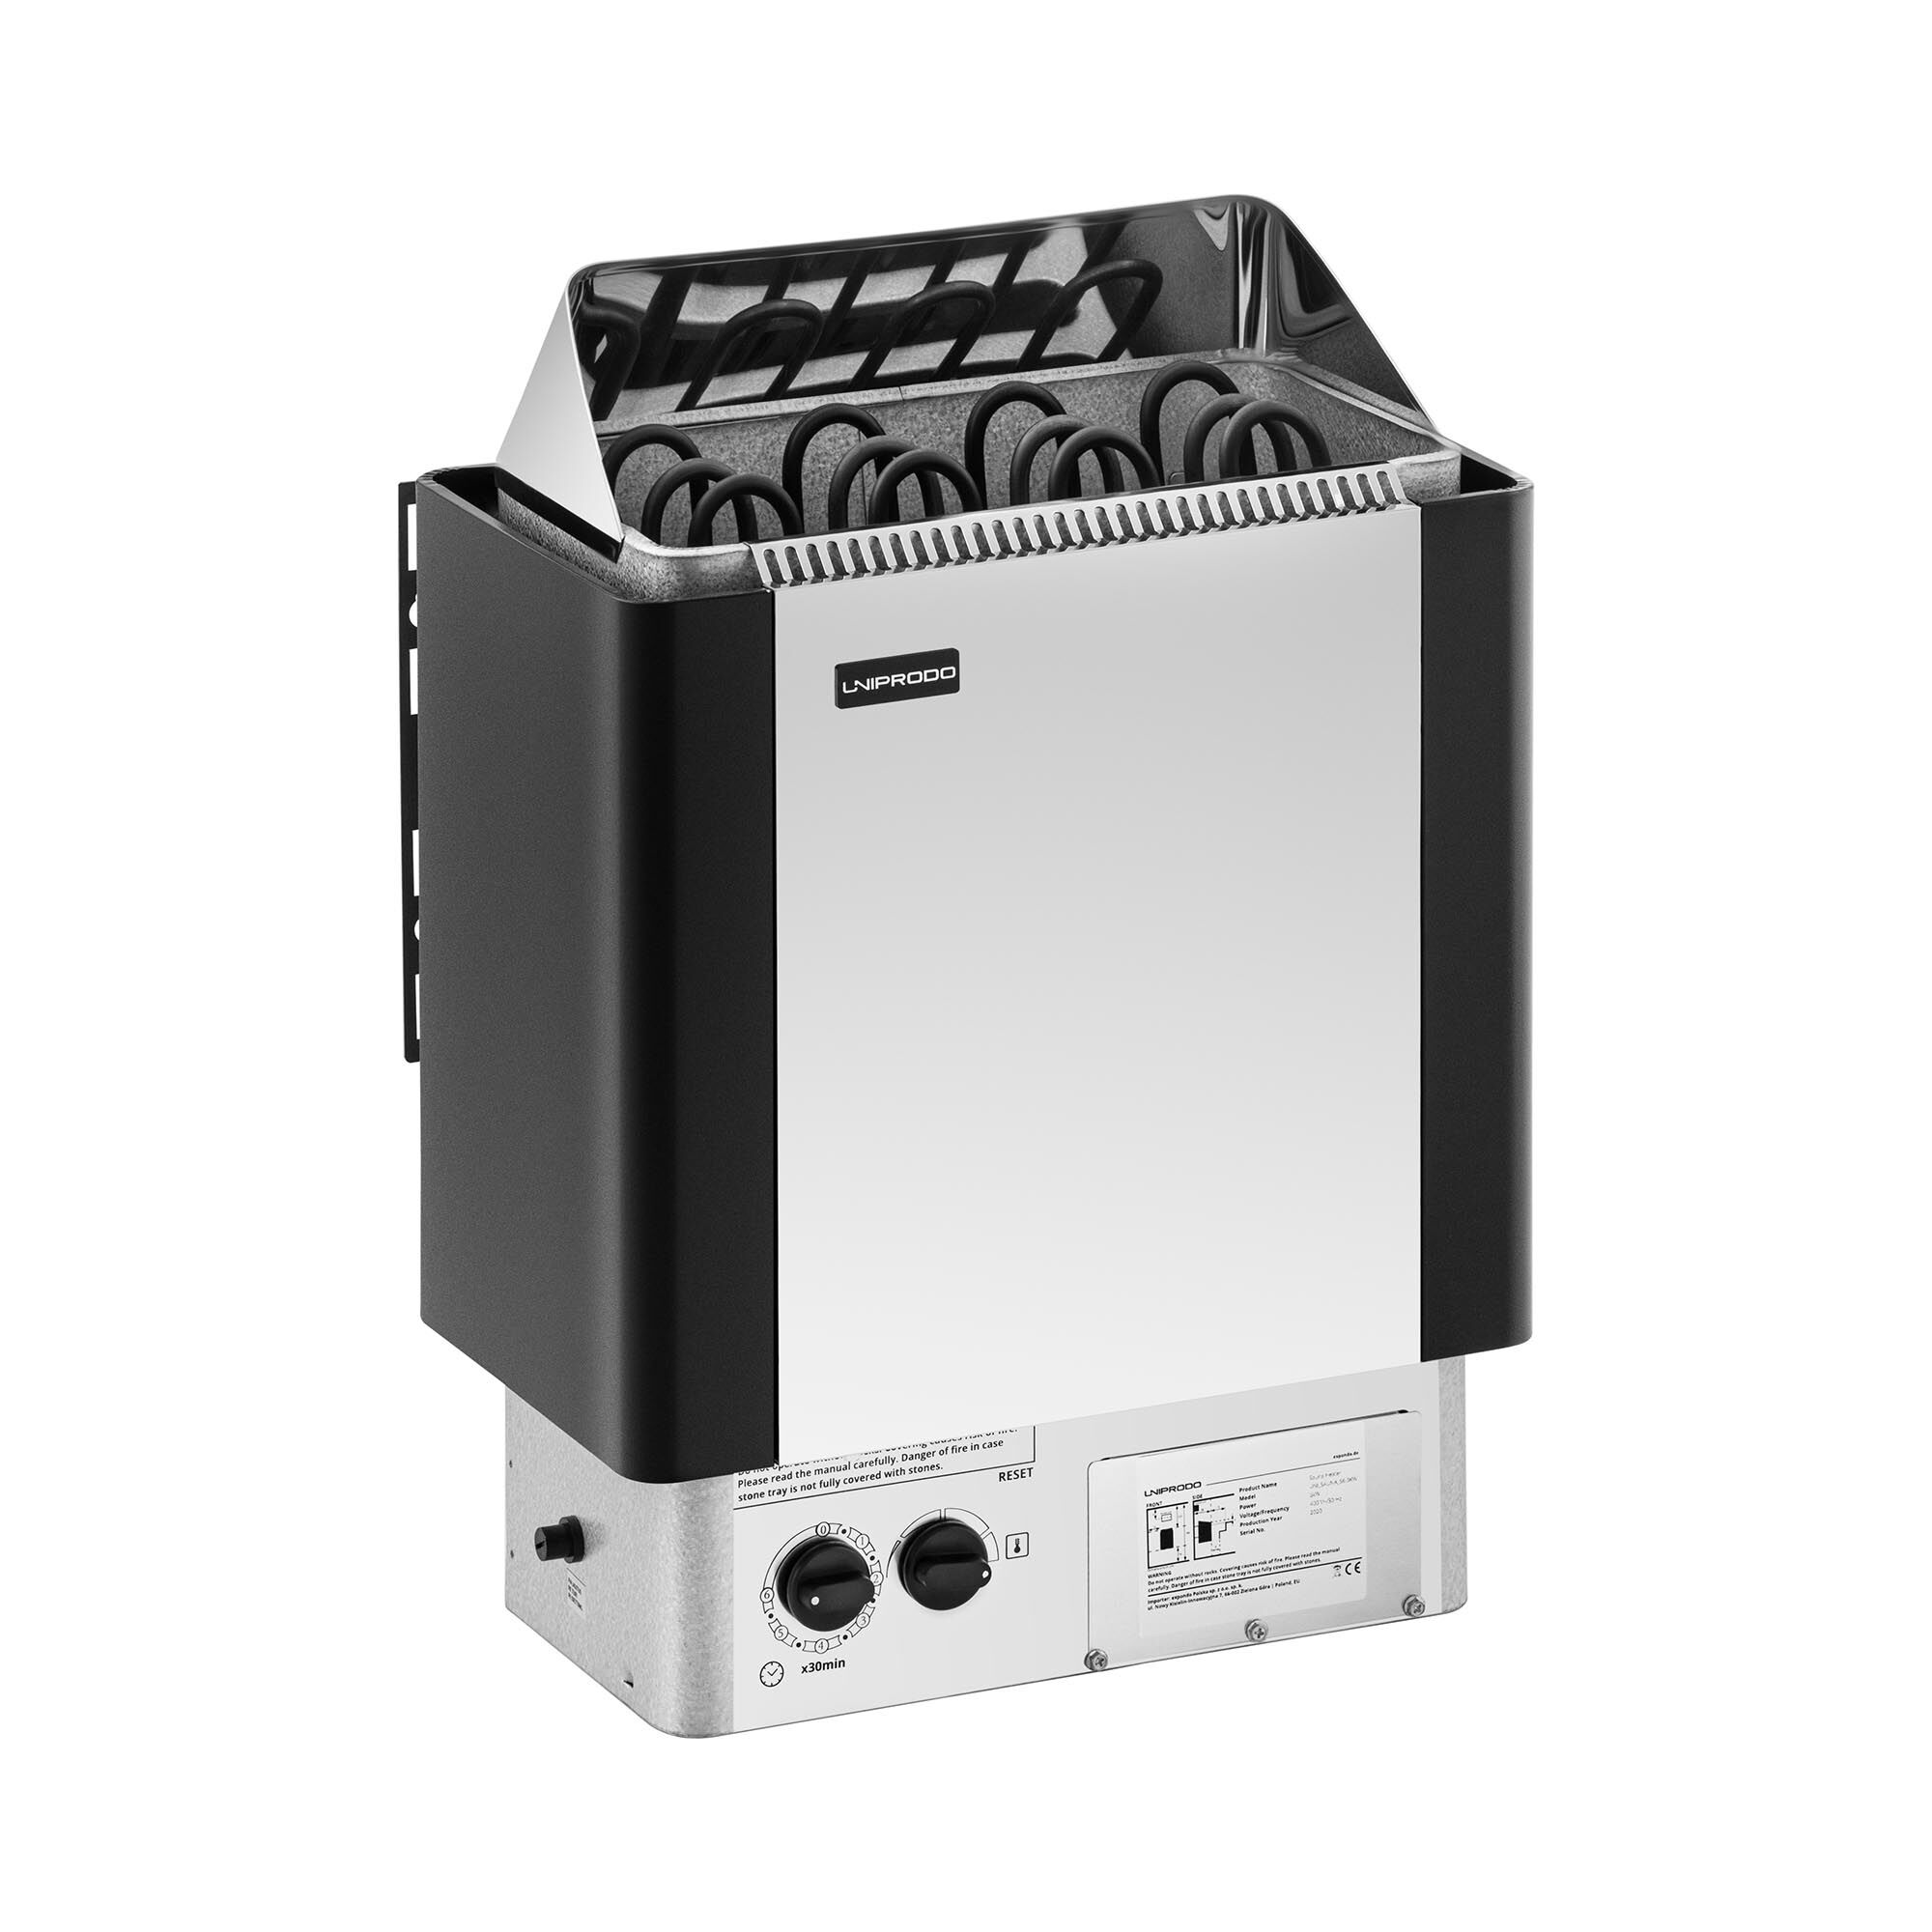 Uniprodo Badstuovn - 6 kW - 30 til 110 °C - inkl. kontrollpanel 10250217